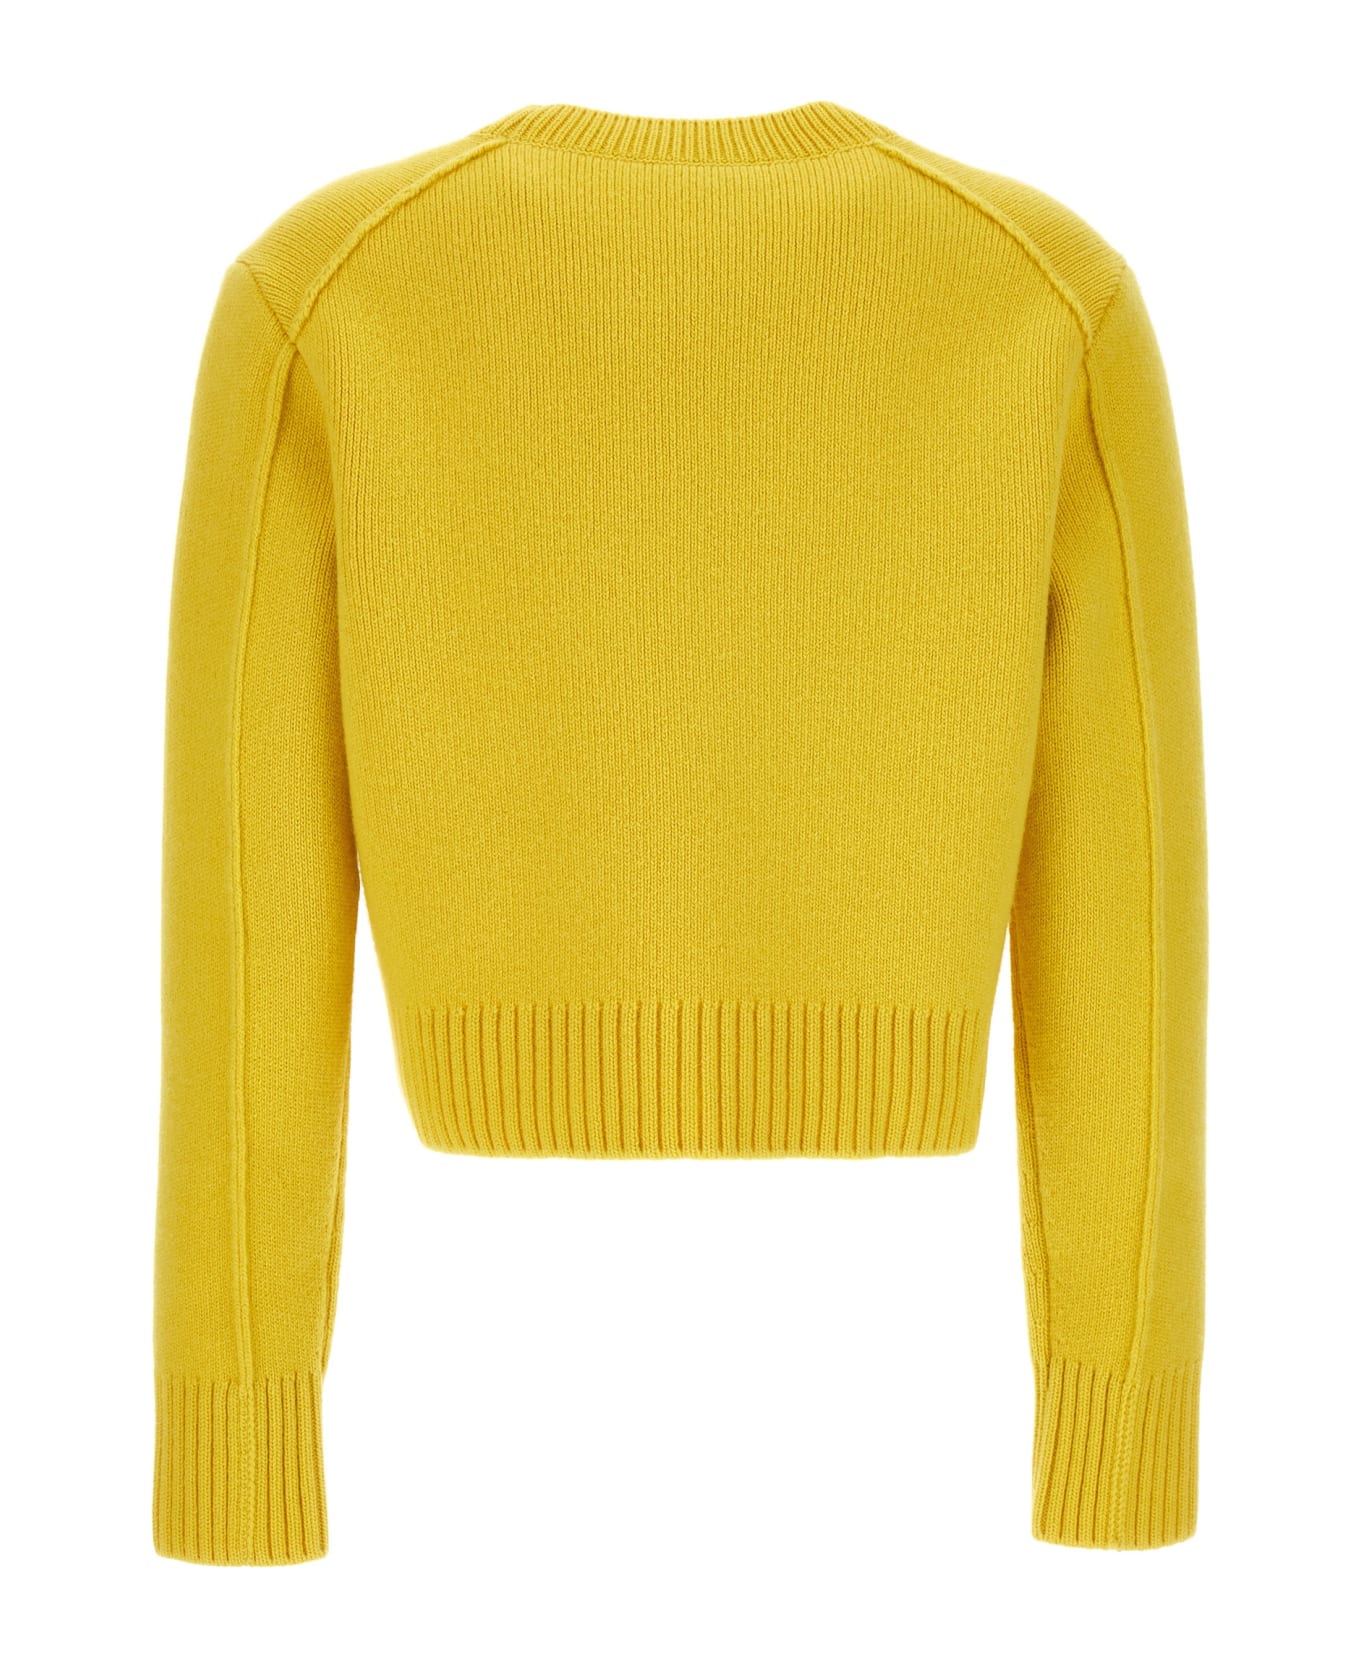 Lanvin Cashmere Wool Sweater - Yellow